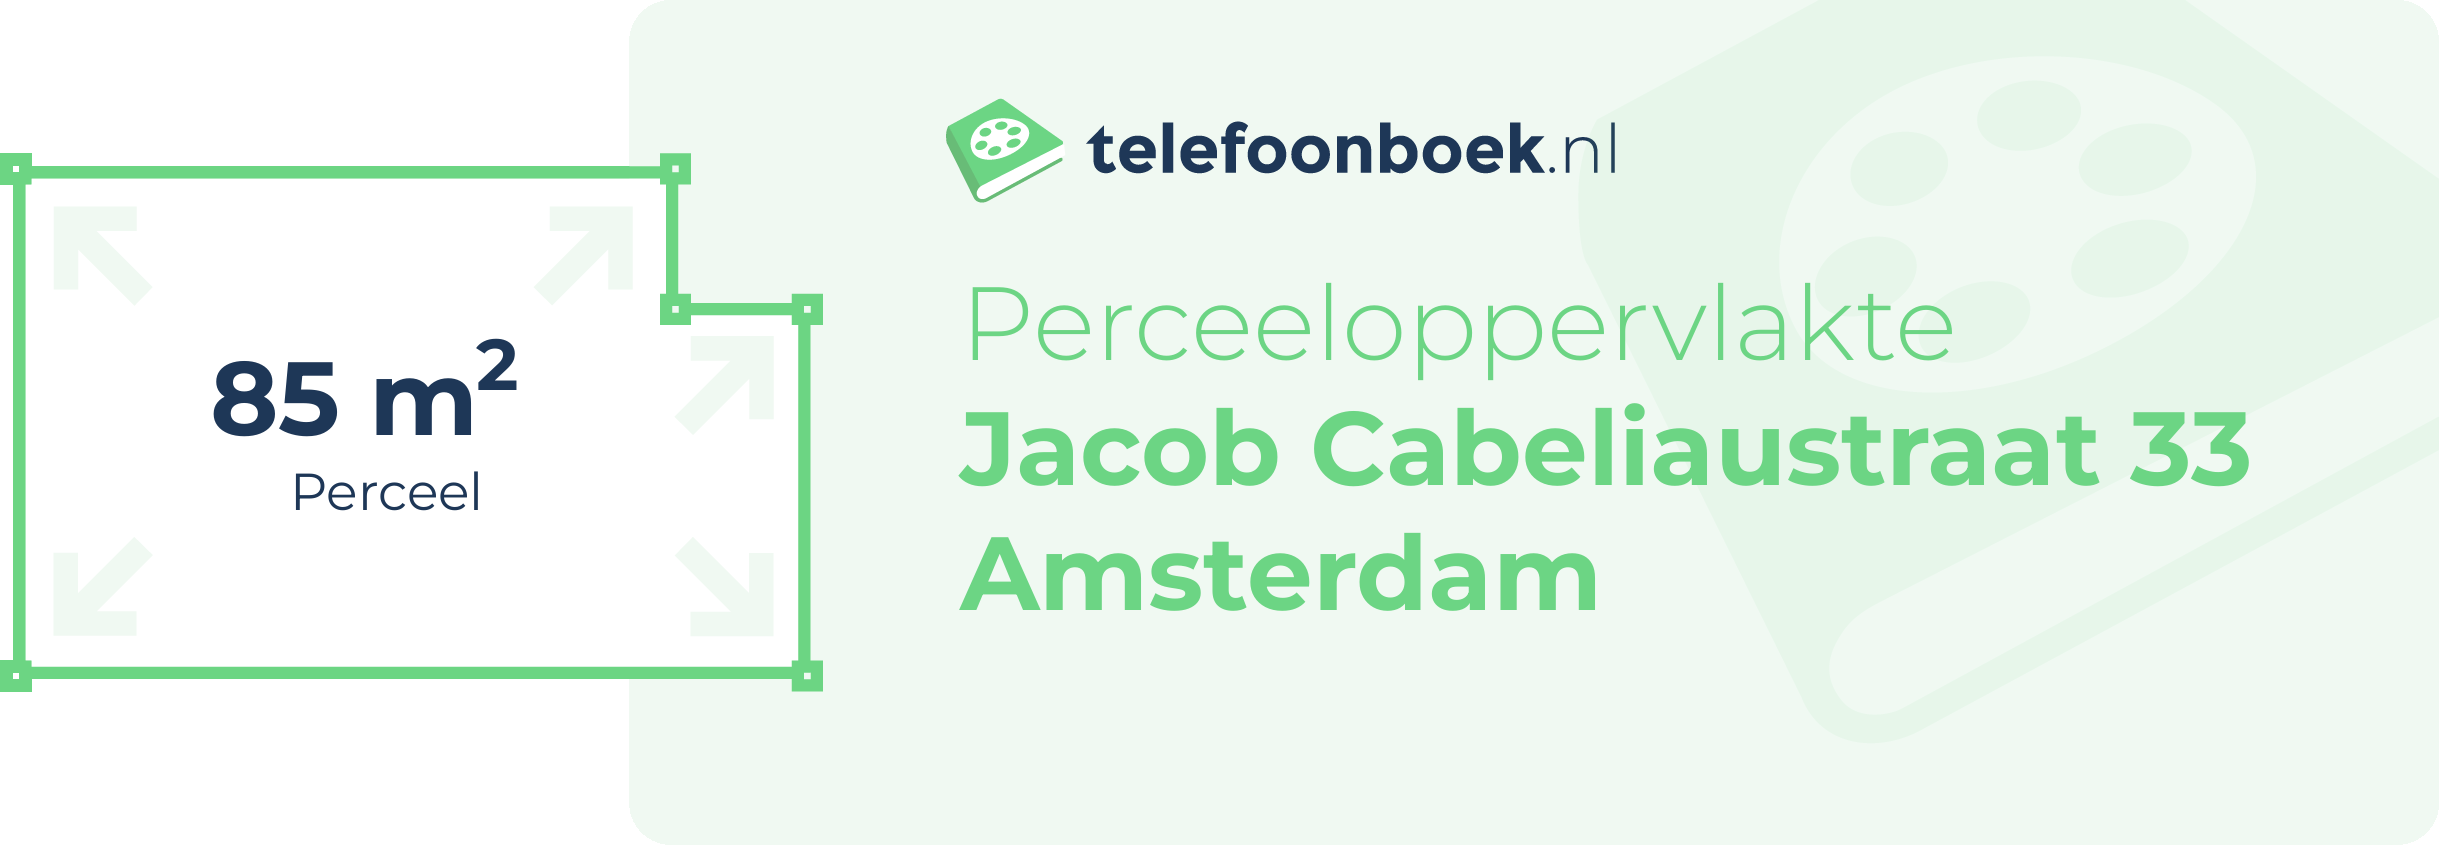 Perceeloppervlakte Jacob Cabeliaustraat 33 Amsterdam